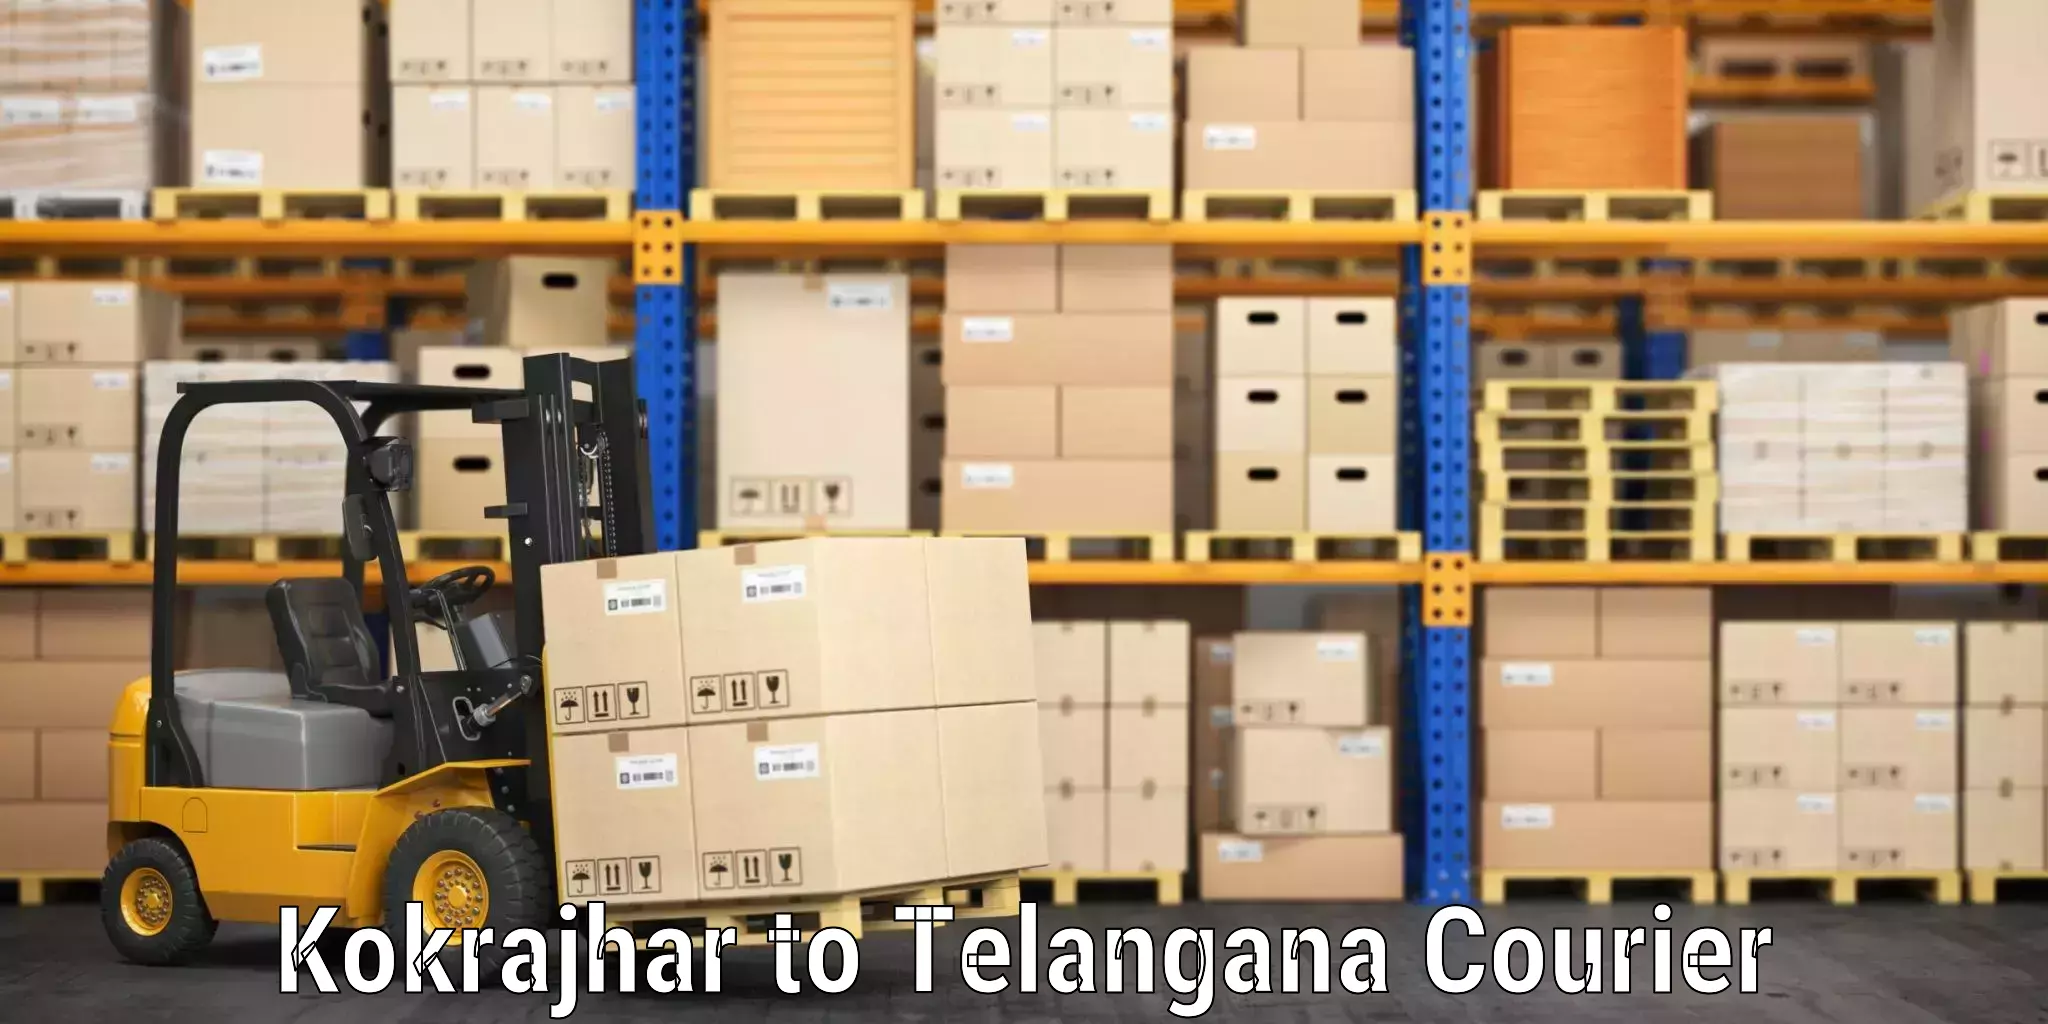 Luggage shipment processing Kokrajhar to Dharmapuri Jagtial